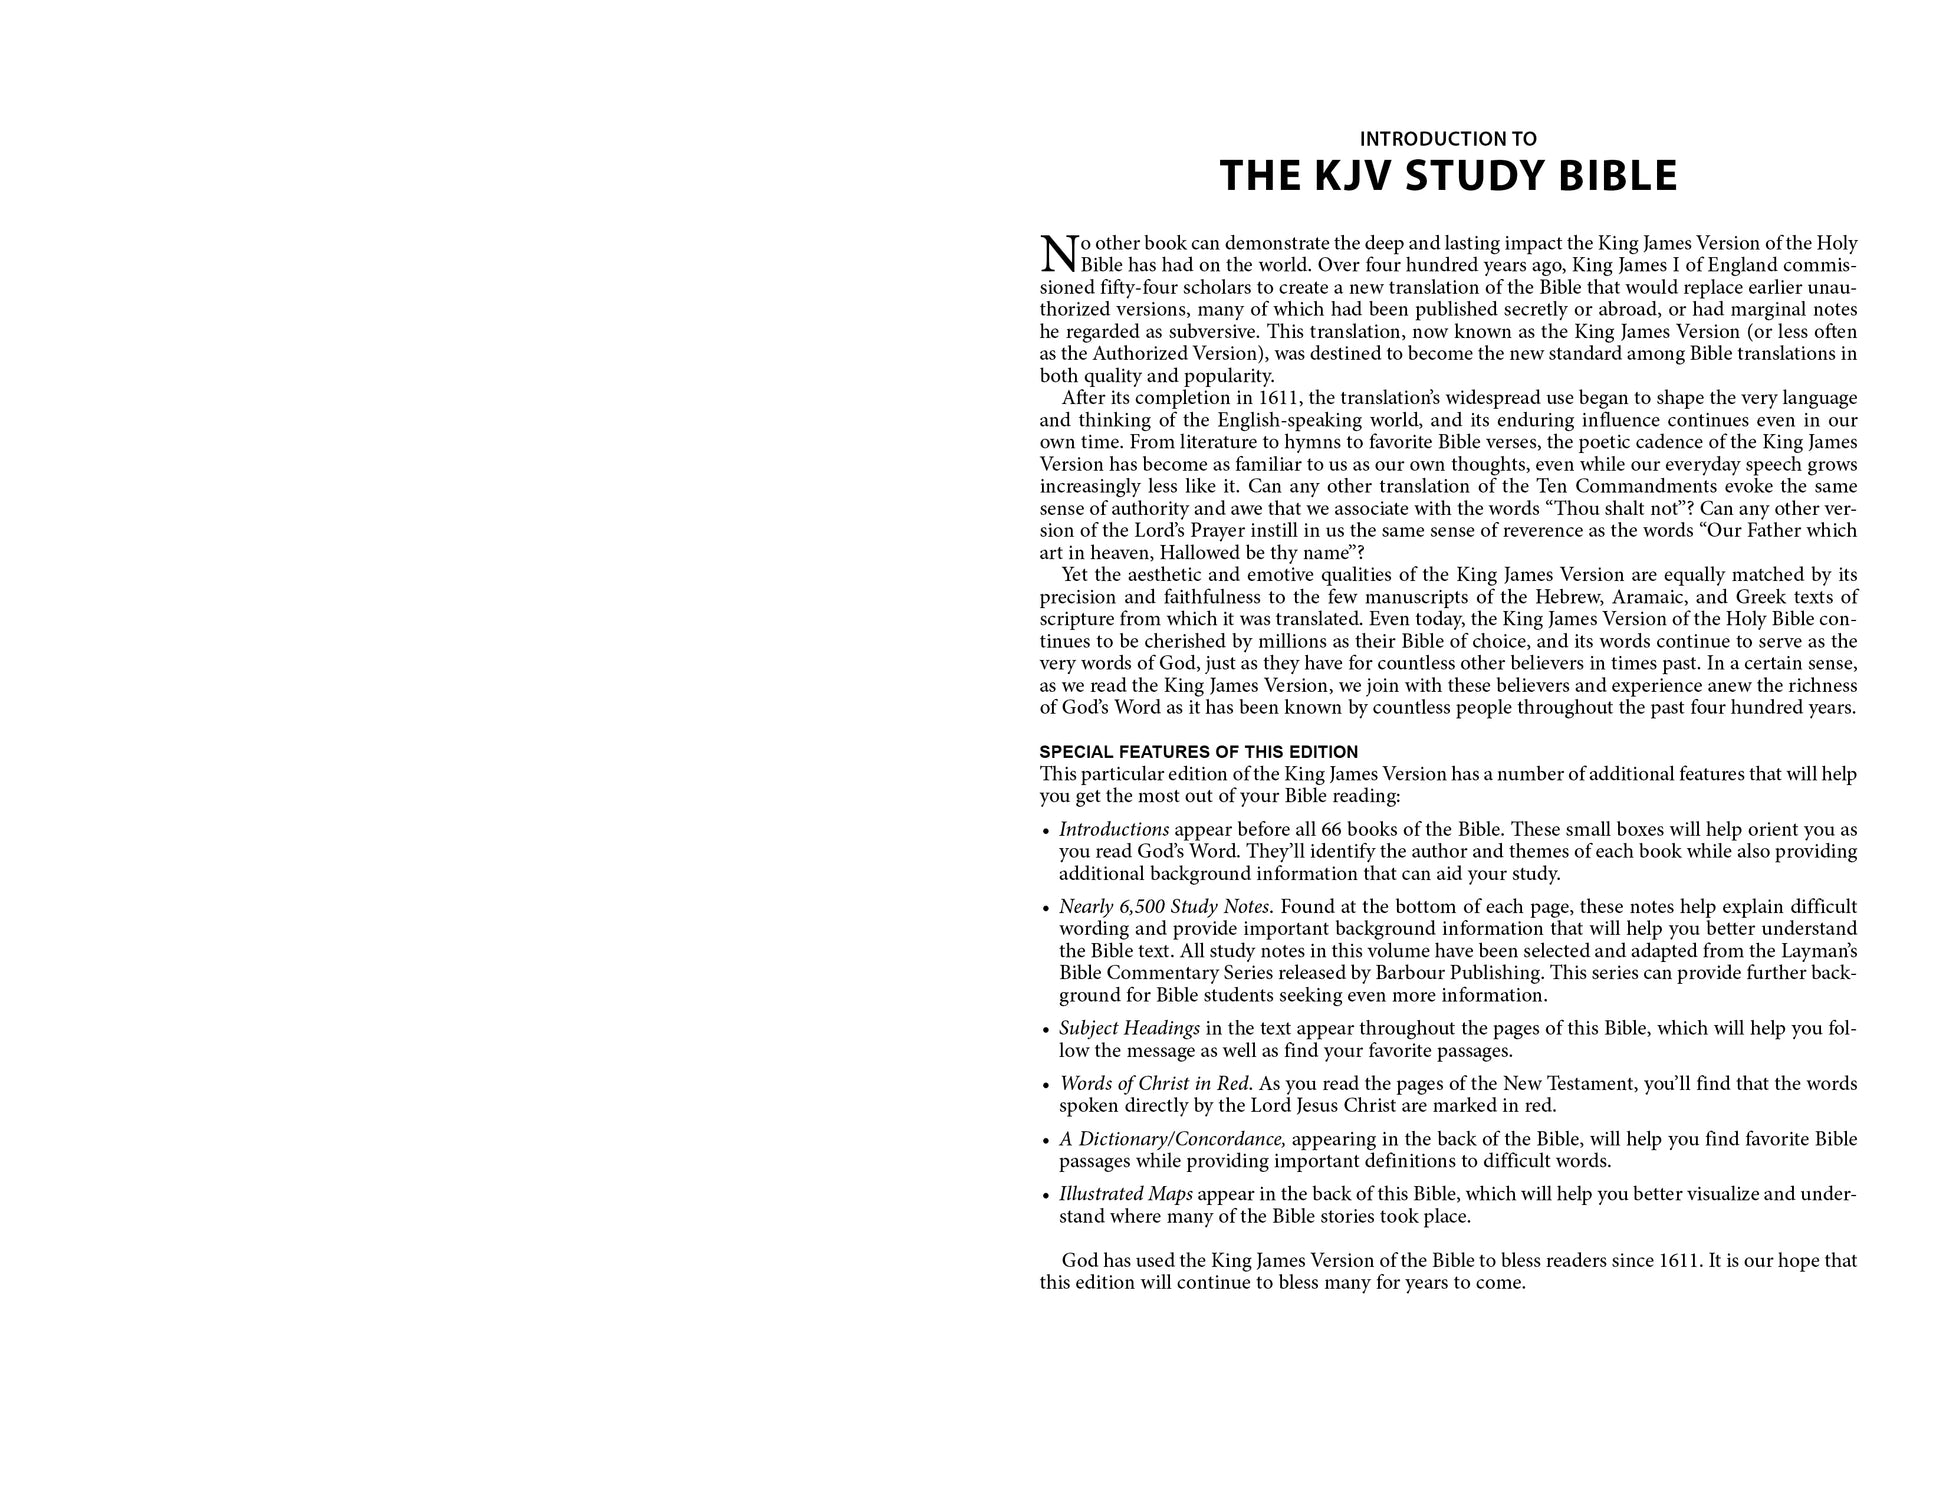 KJV Study Bible (Wildflower Bouquet) - The Christian Gift Company